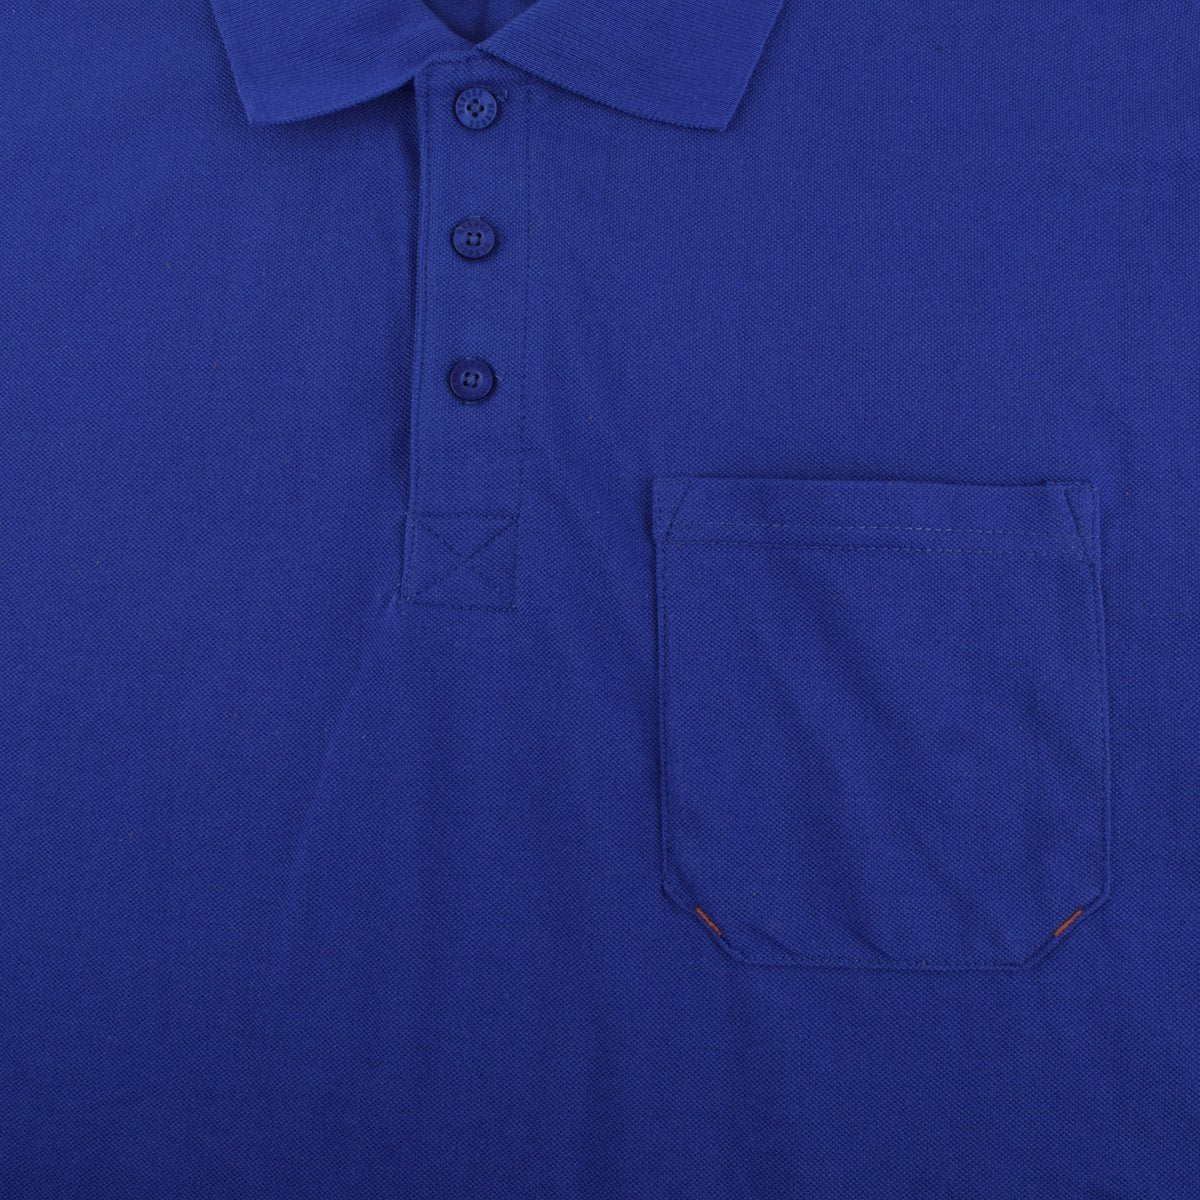 HRCK Apica Short Sleeve Polo Shirt Men's Polo Shirt Image 